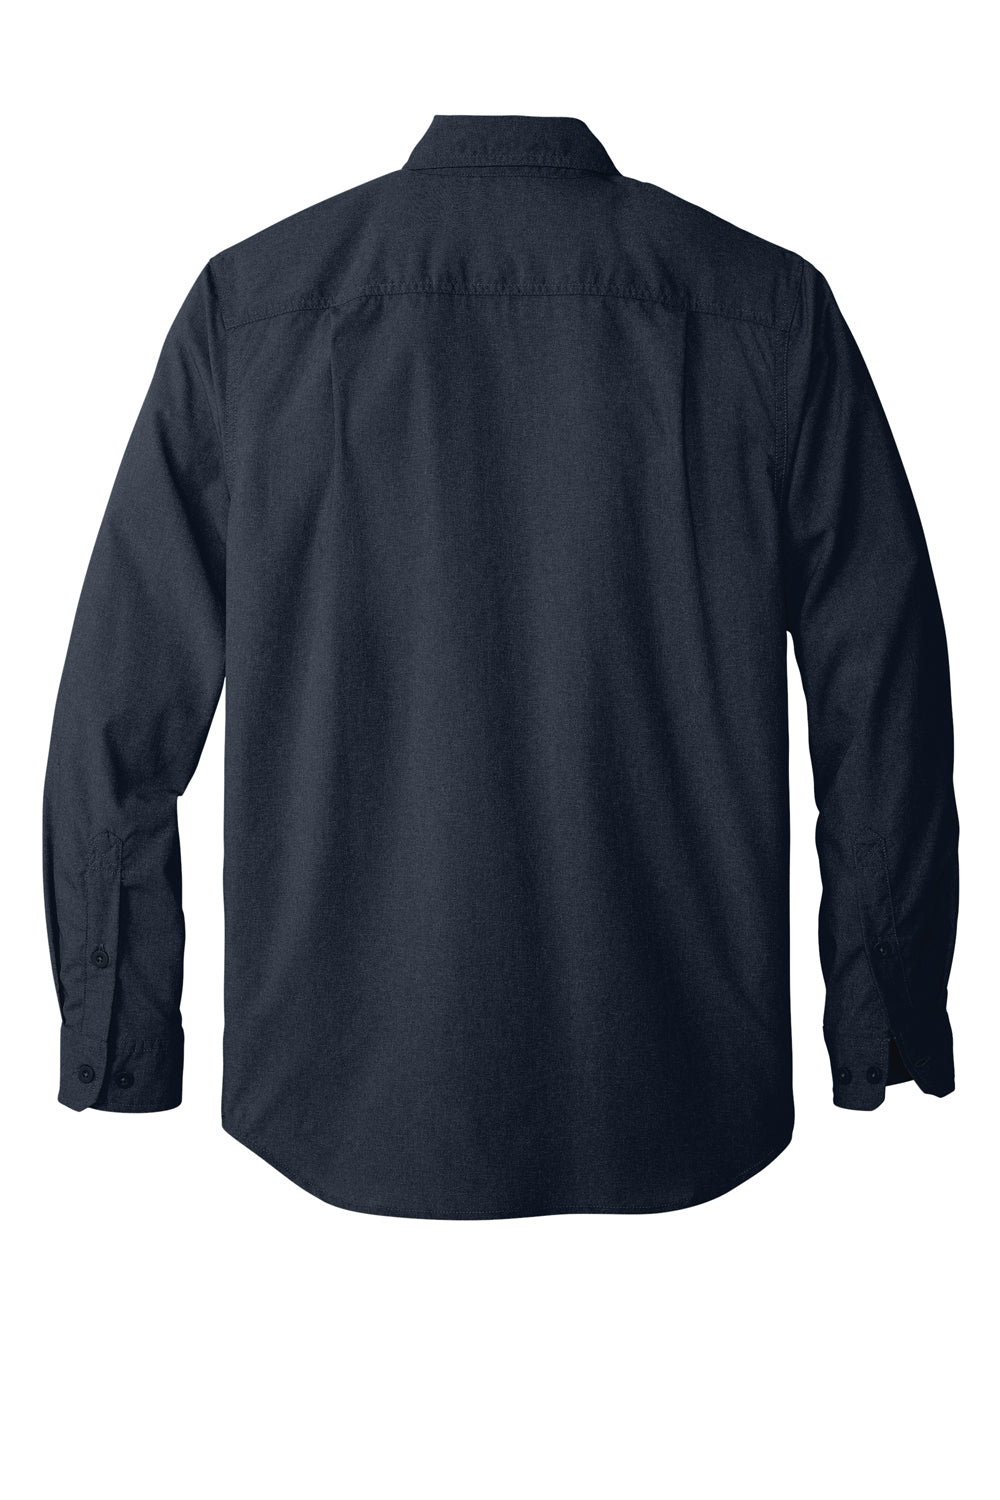 Carhartt CT105291 Mens Force Moisture Wicking Long Sleeve Button Down Shirt w/ Double Pockets Navy Blue Flat Back